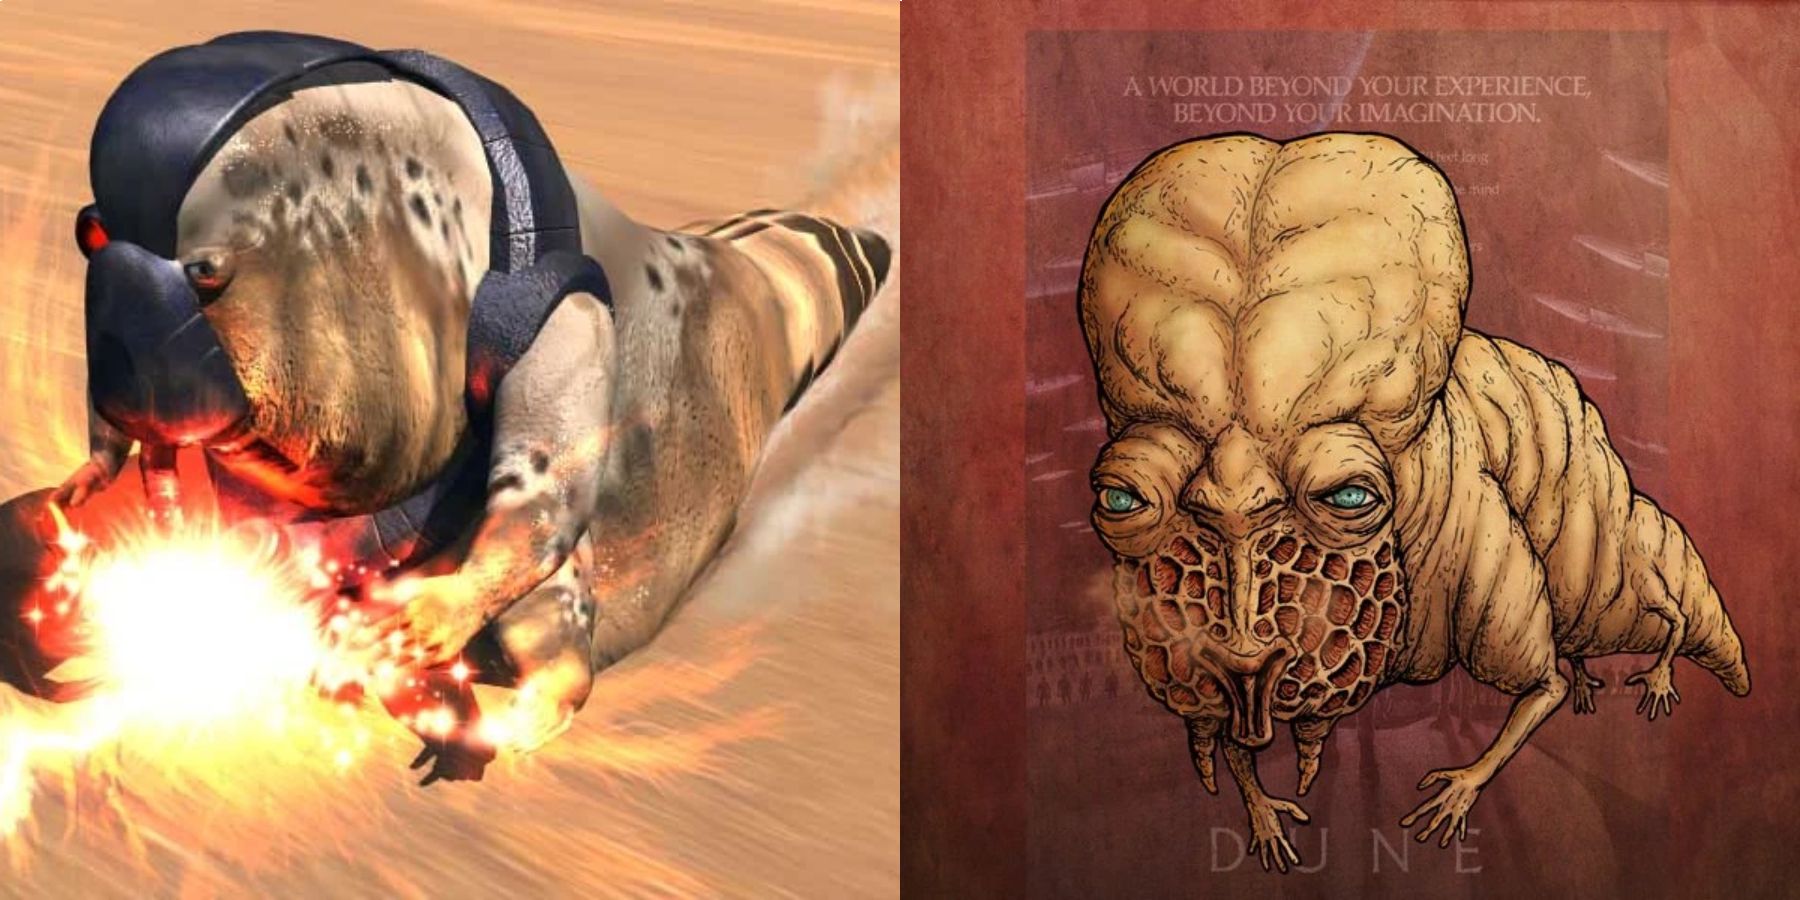 Guild Navigator in Dune PC game and artwork split image